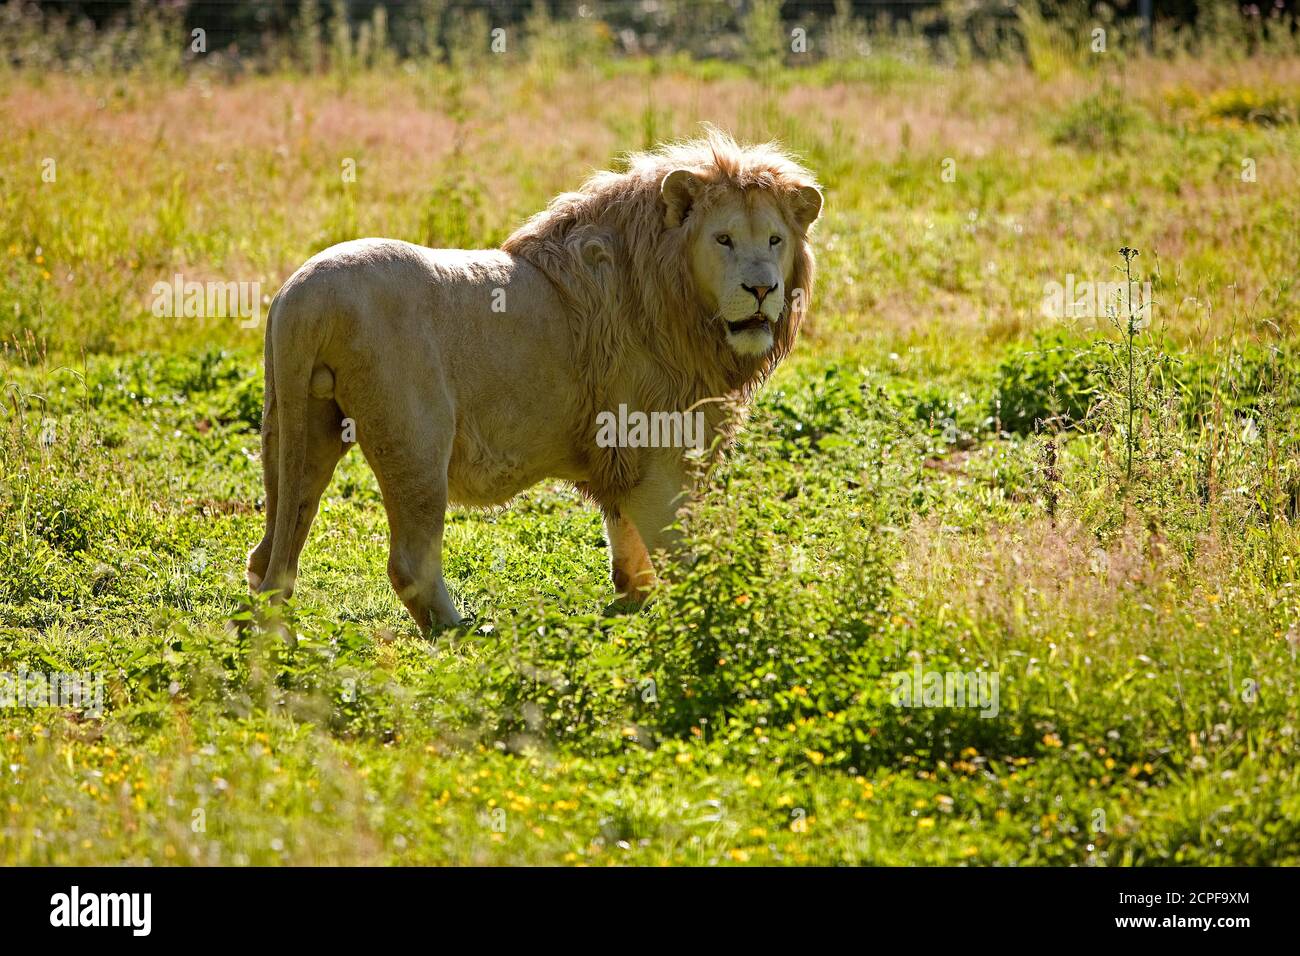 Leone bianco, panthera leo krugensis, maschio in piedi su erba Foto Stock